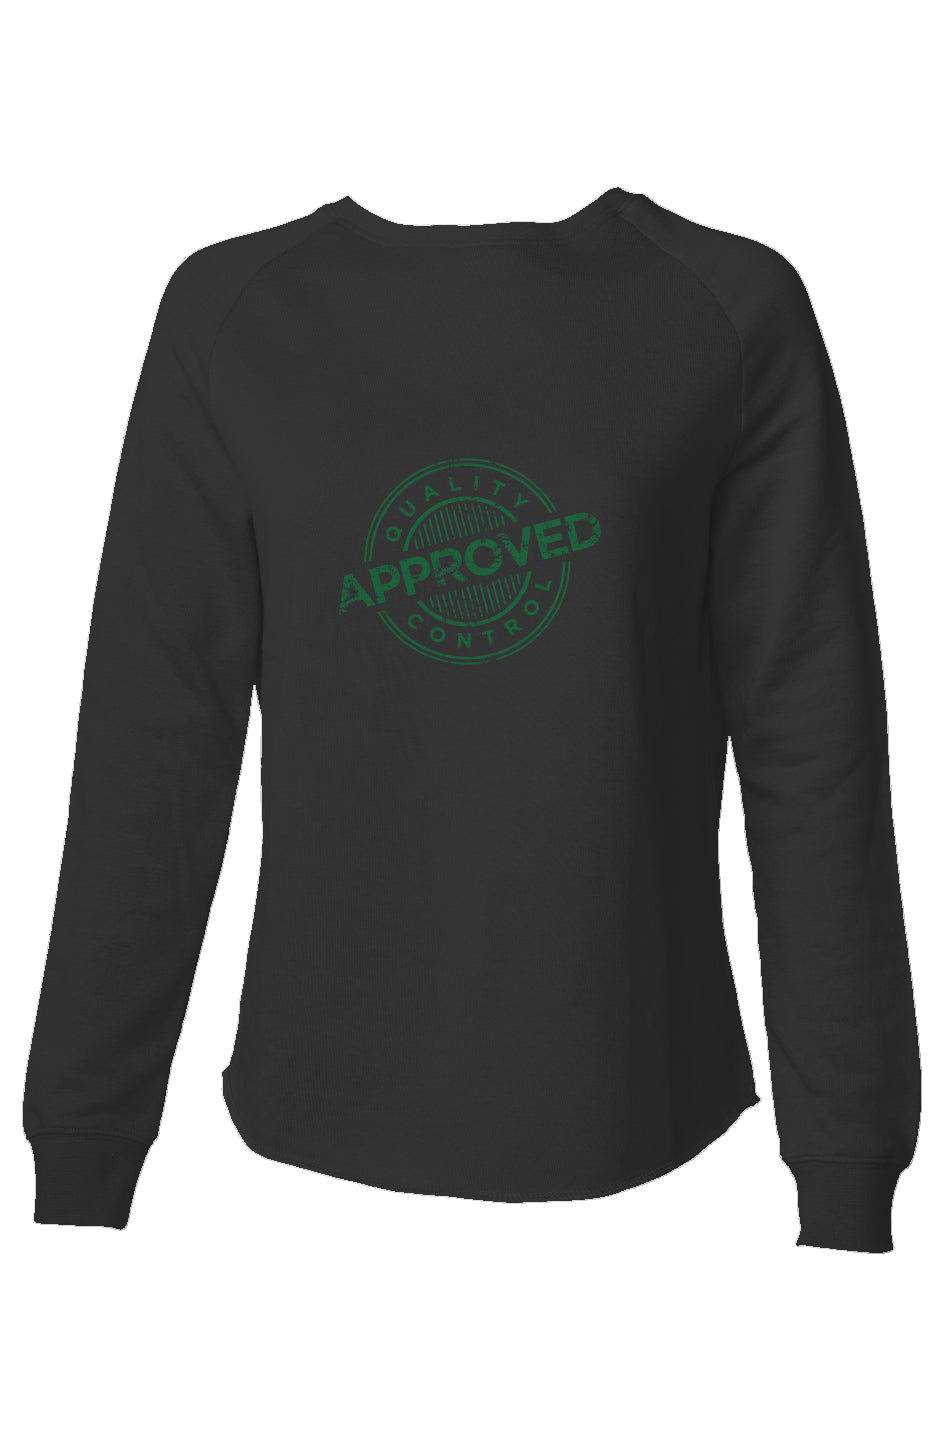 Women's DuGamii Lightweight "Quality Control Approved" Black Sweatshirt